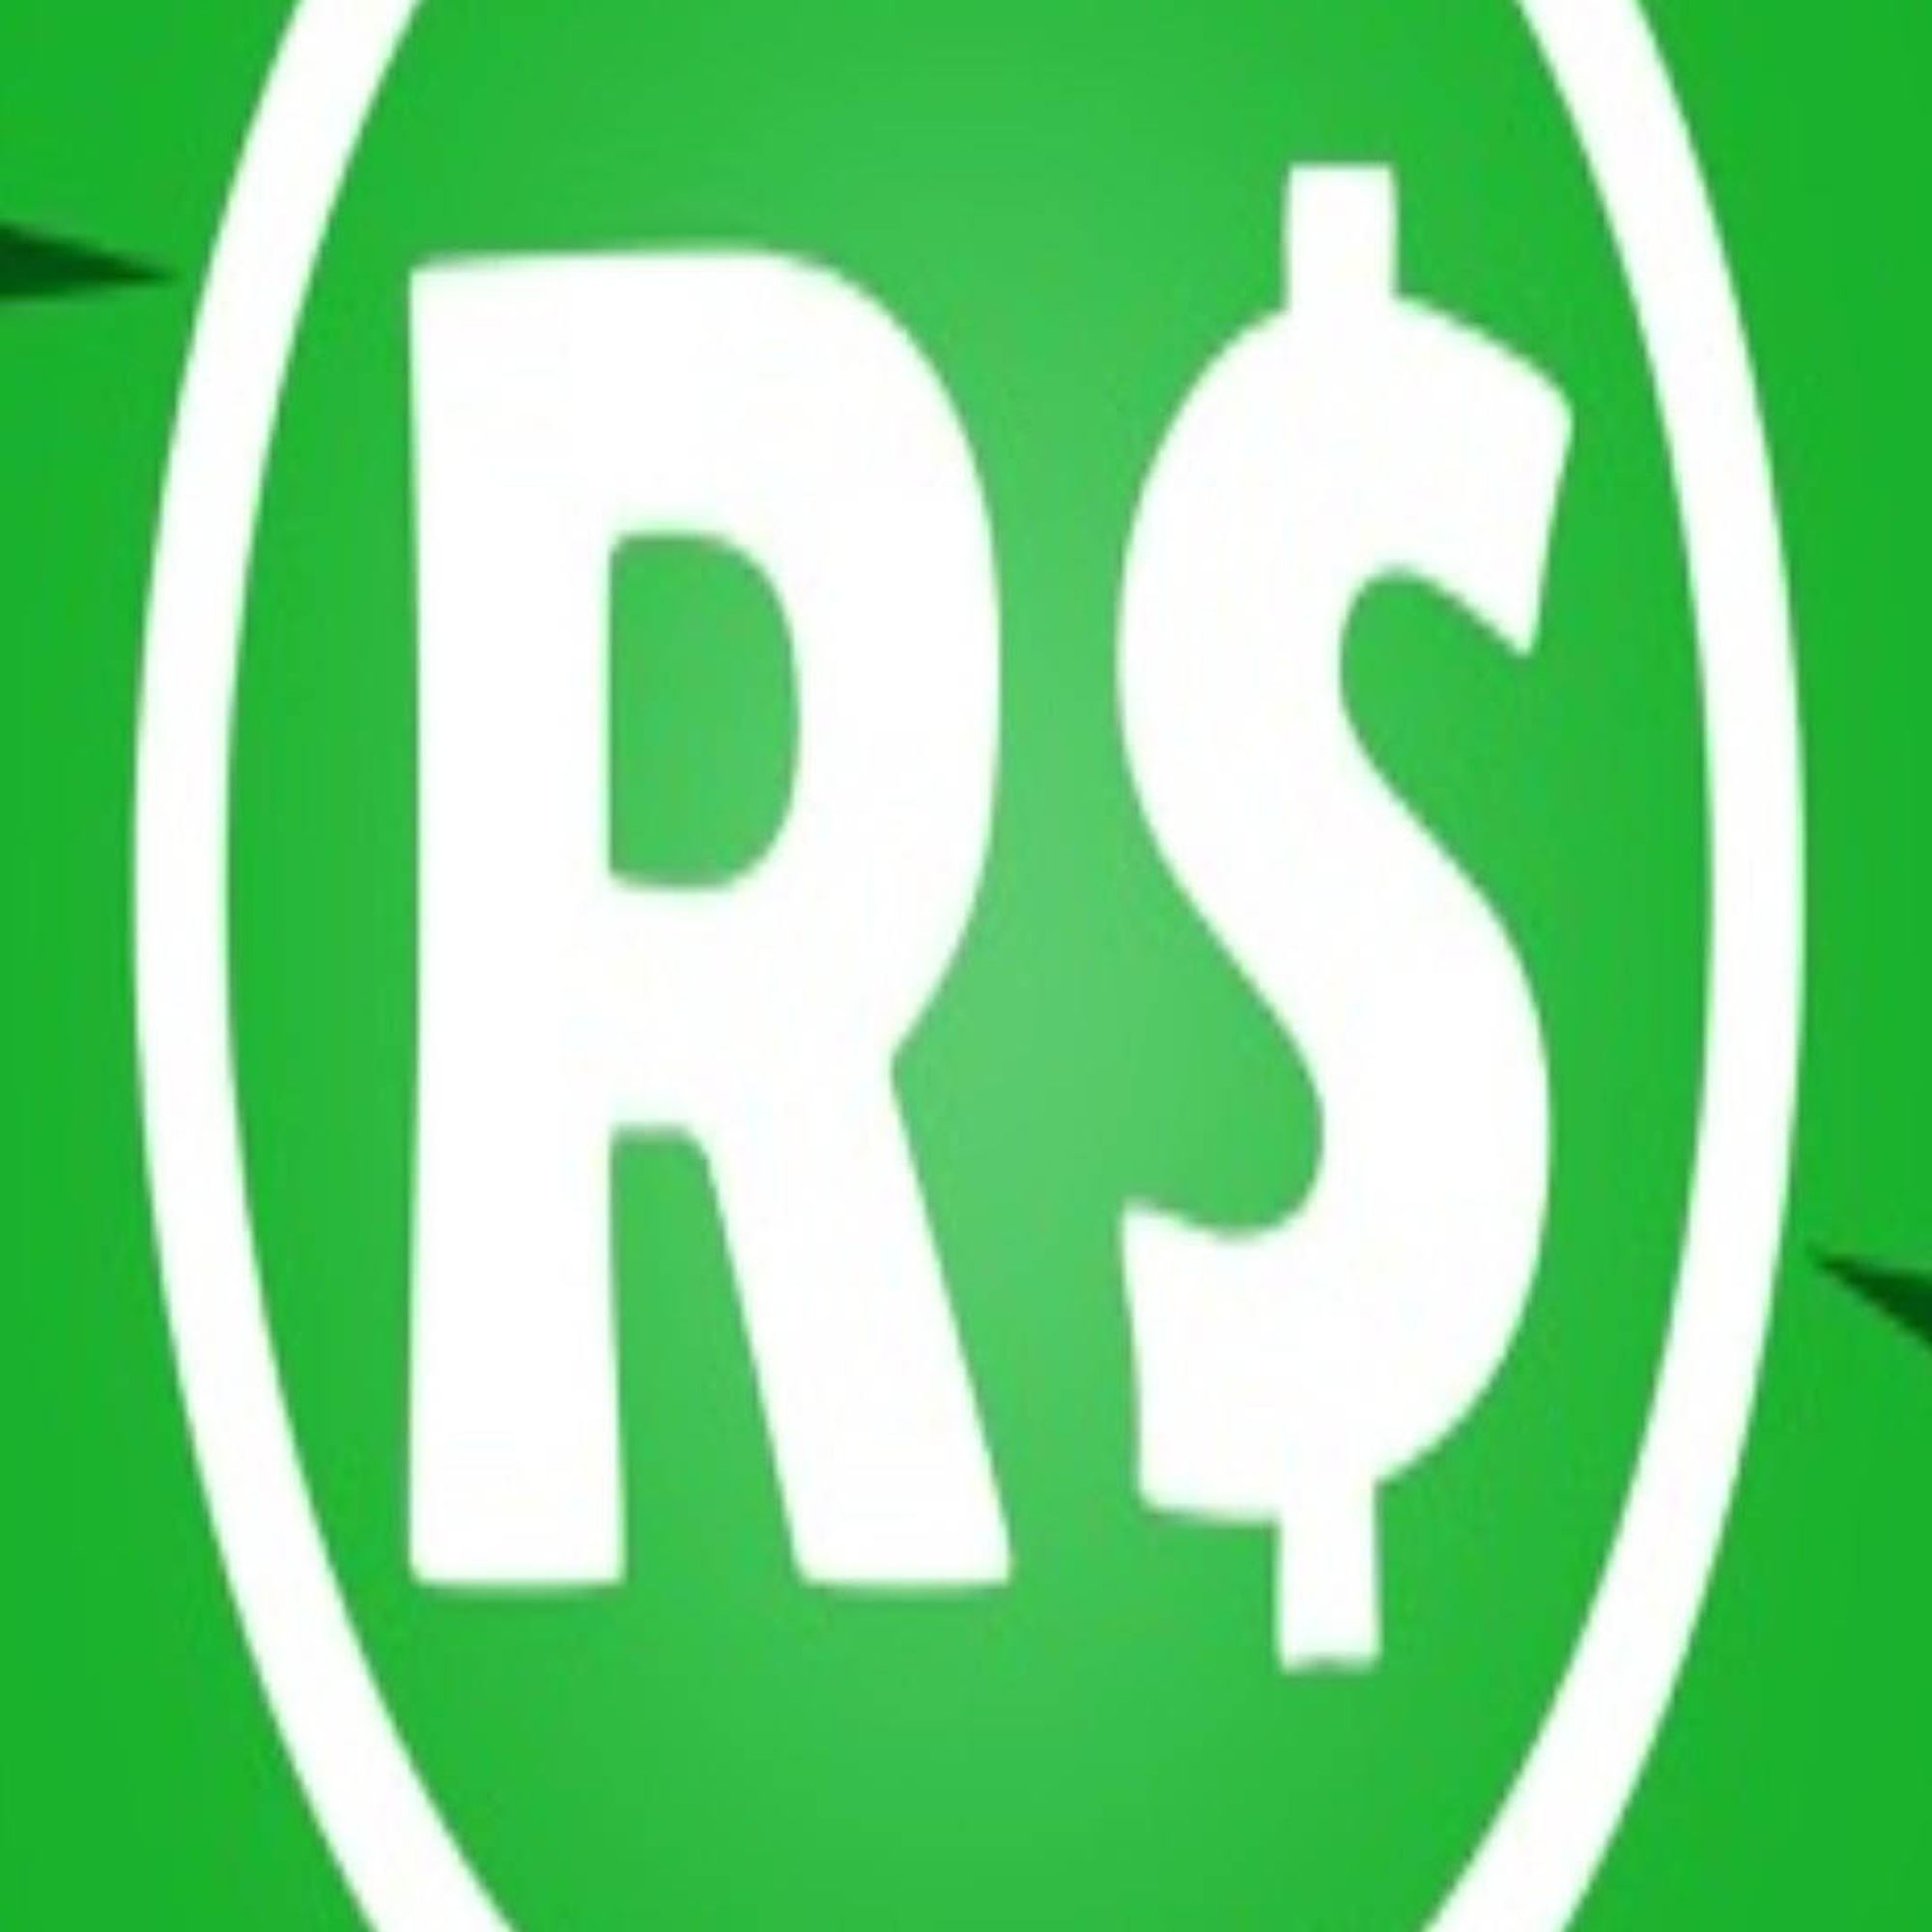 Free Robux Script Roblox Hack Club Roblox Bucks - www.free robux hack generator.club